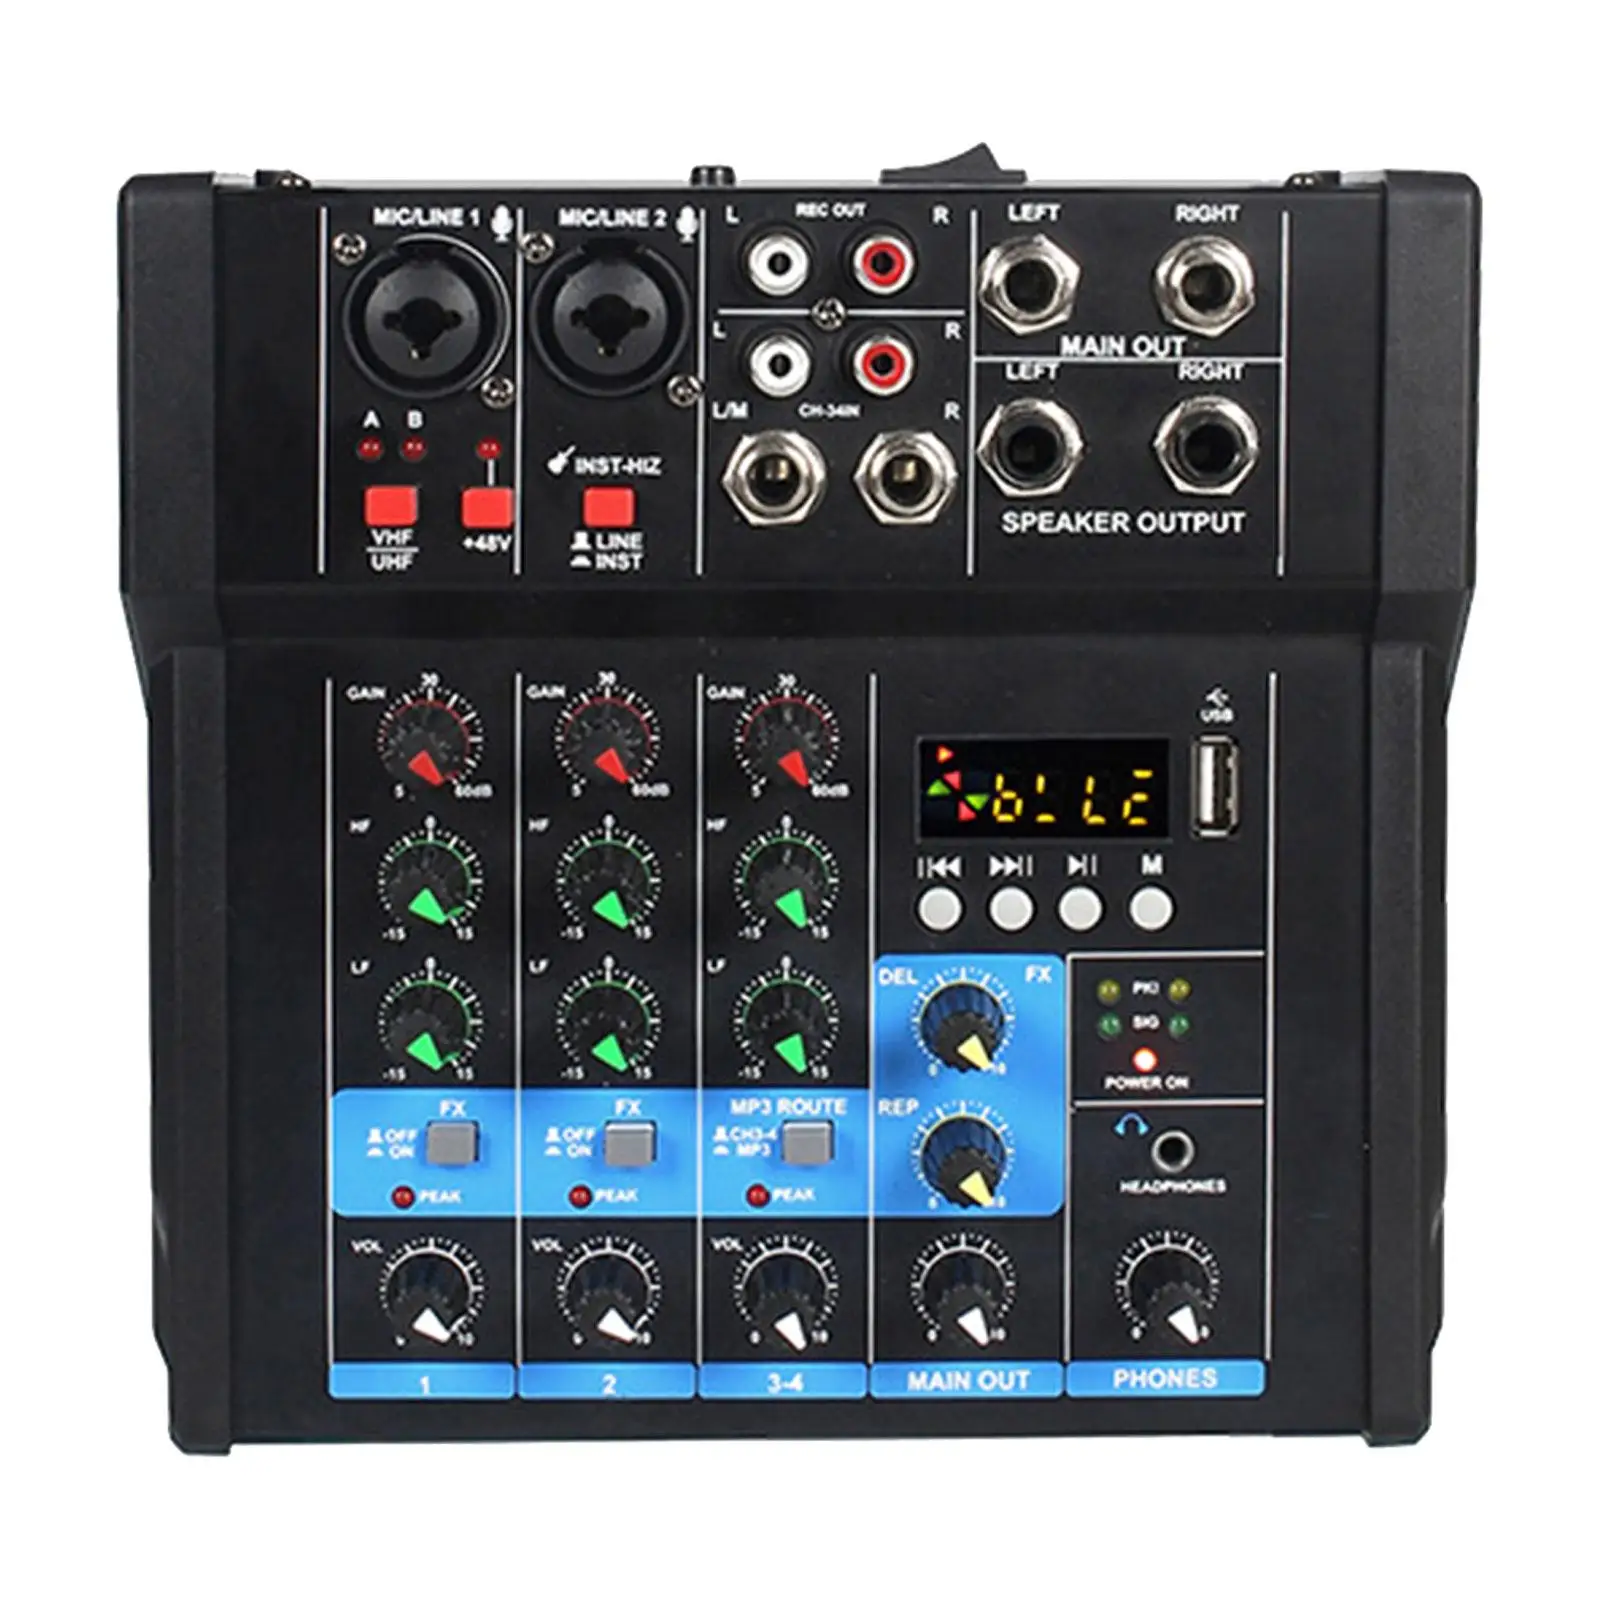 Audio Mixer Amplifier MP3 Bluetooth USB Interface Sound Board Console Sound Mixer for Computer Recording Home Karaoke Party